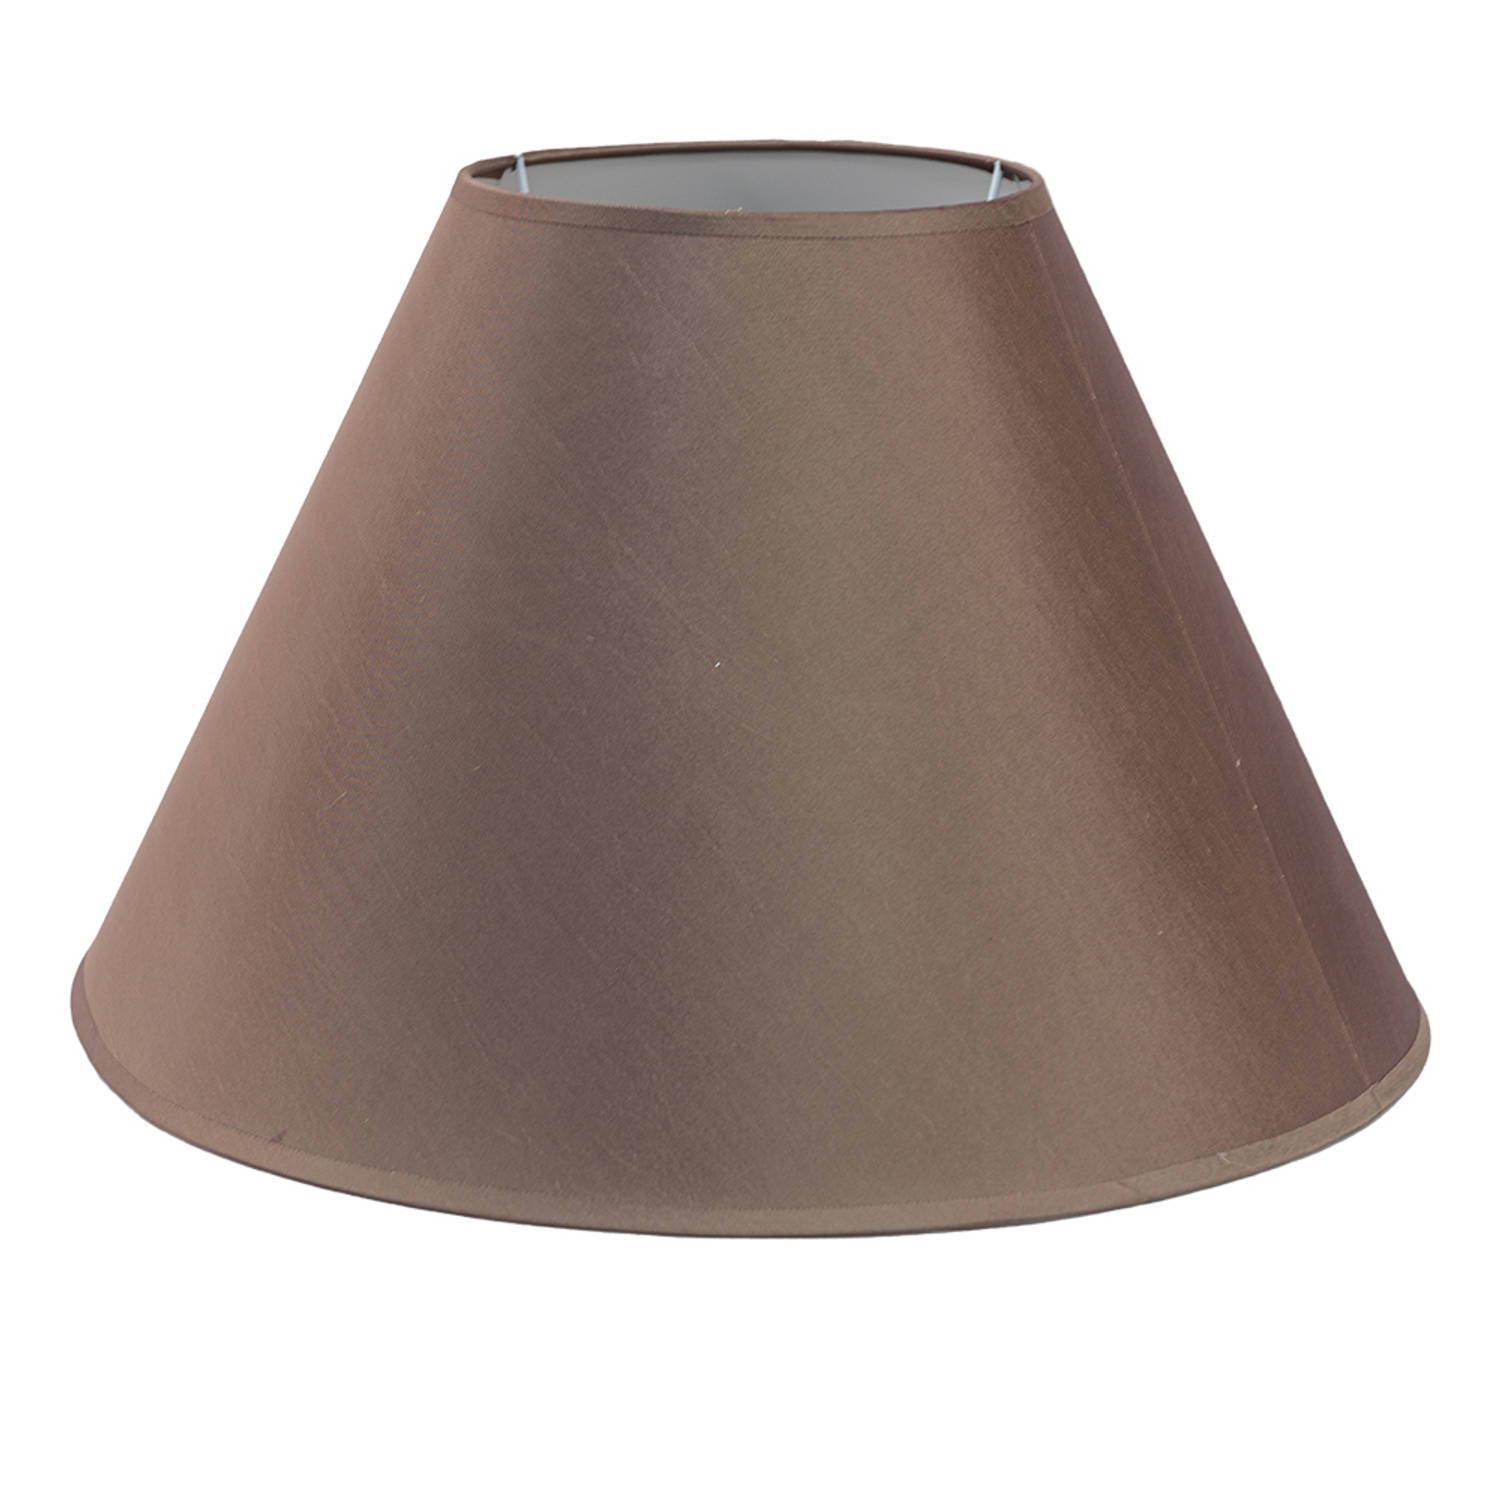 HAES DECO Lampenkap Modern Chic bruin rond formaat Ø 46x28 cm, voor Fitting E27 Tafellamp, Hanglamp